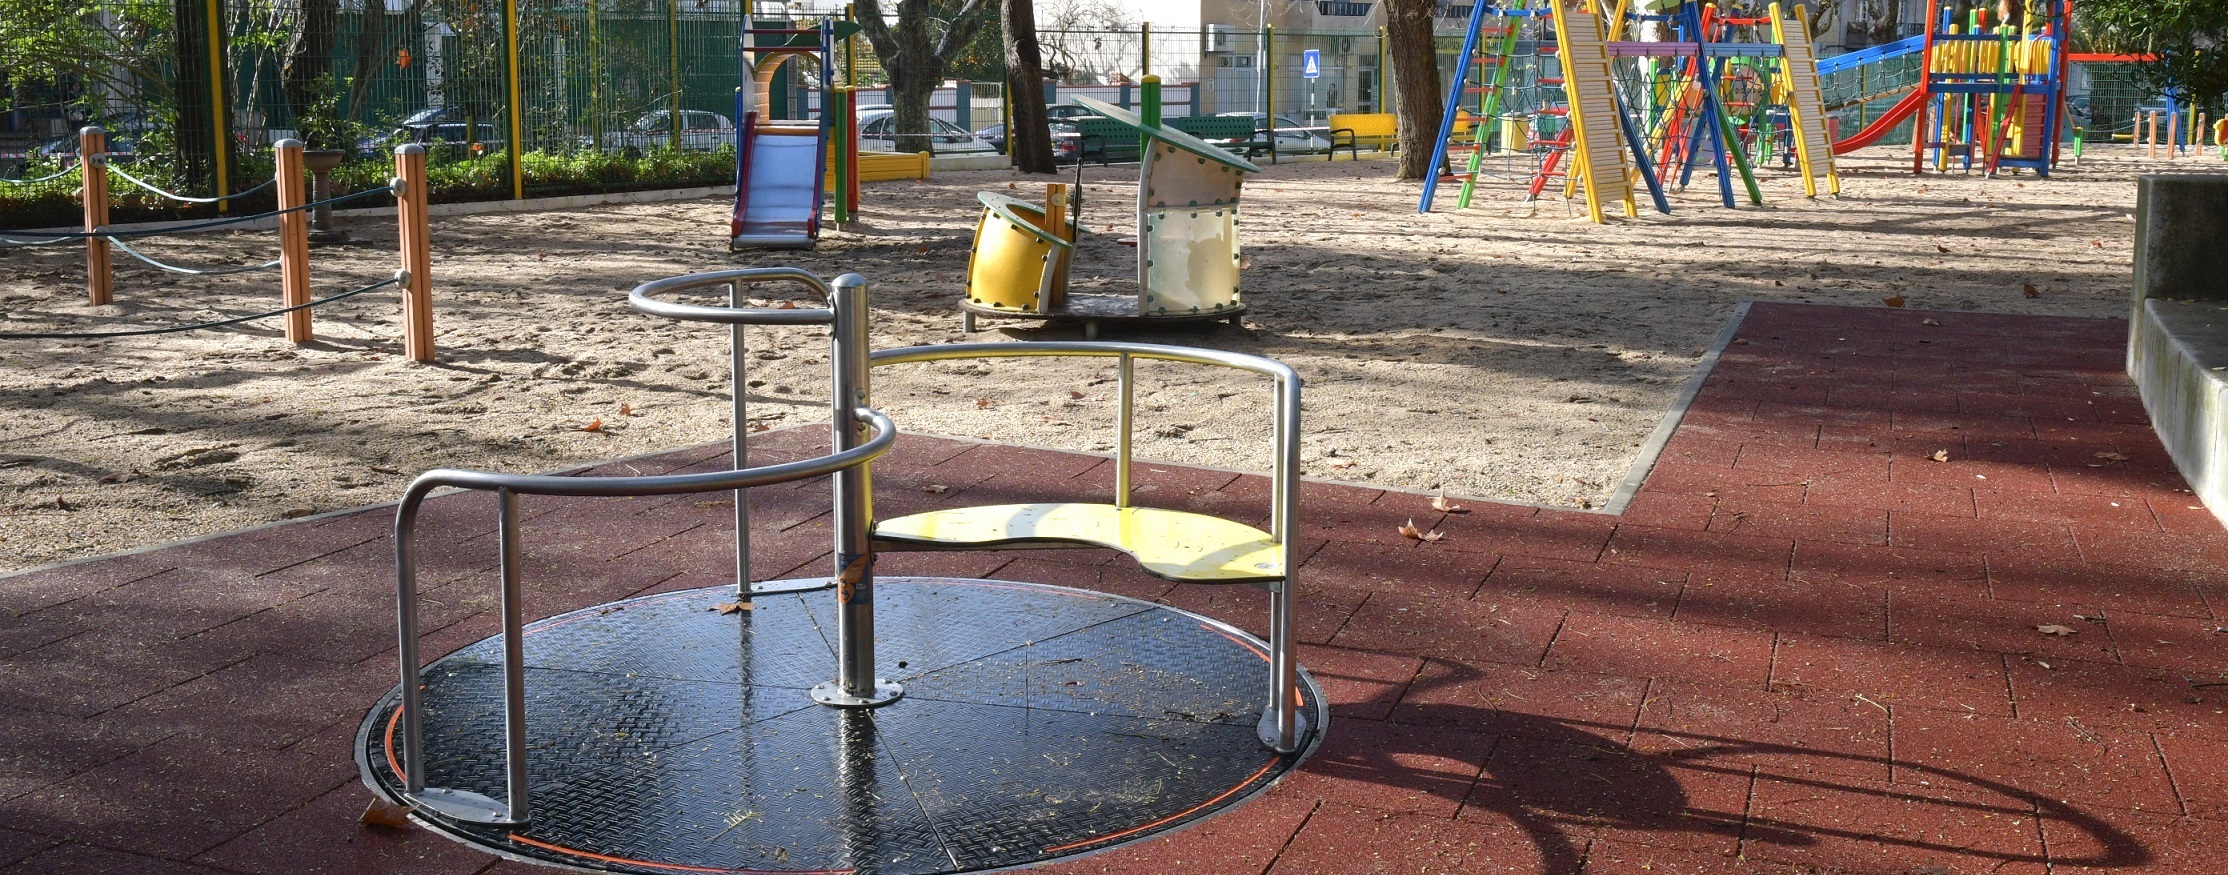 Montijo com parque infantil inclusivo